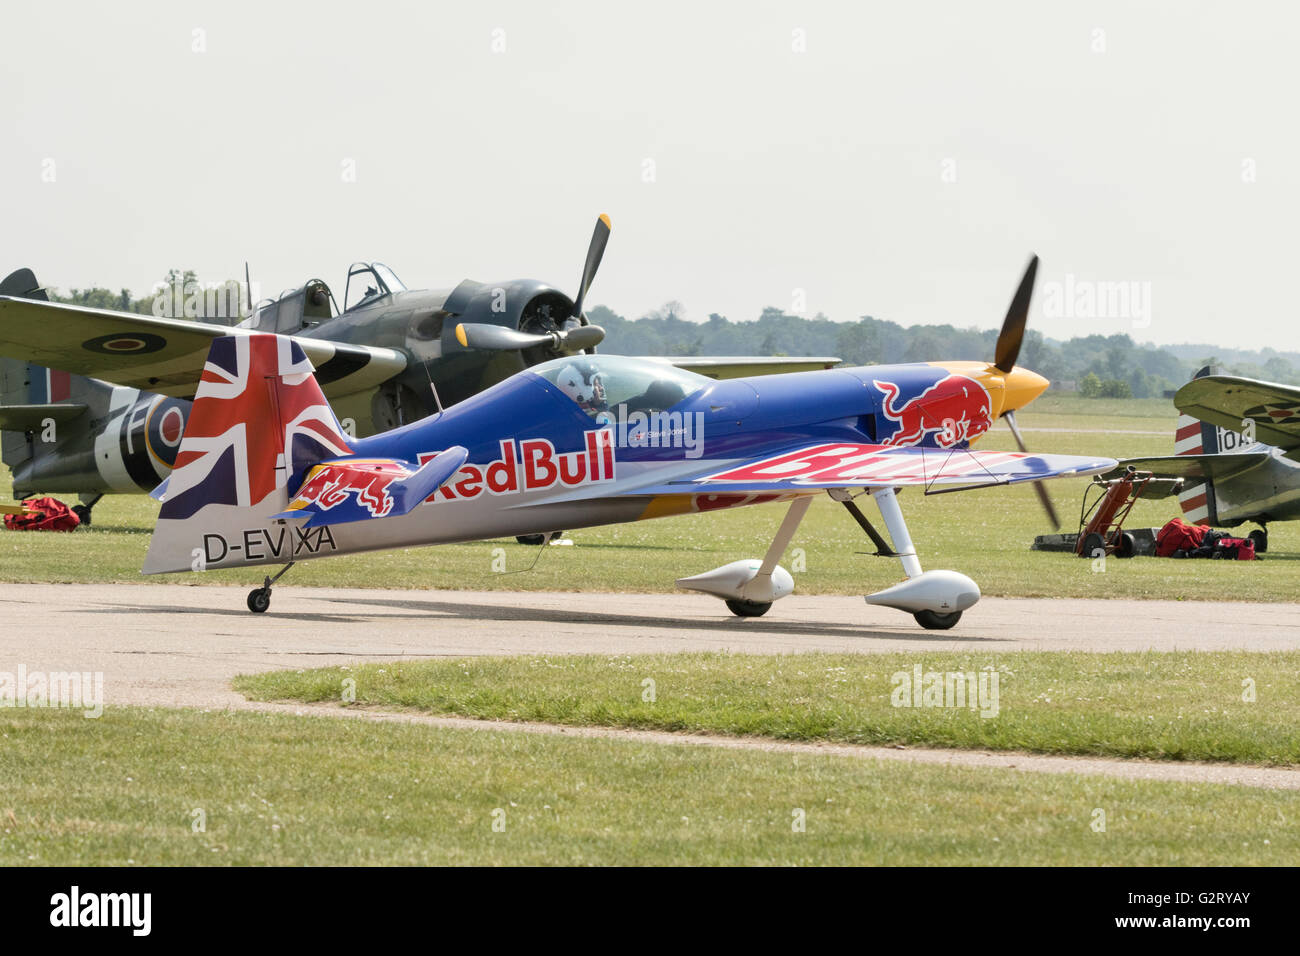 Red Bull aerobatic team plane on the ground, Duxford, UK Stock Photo